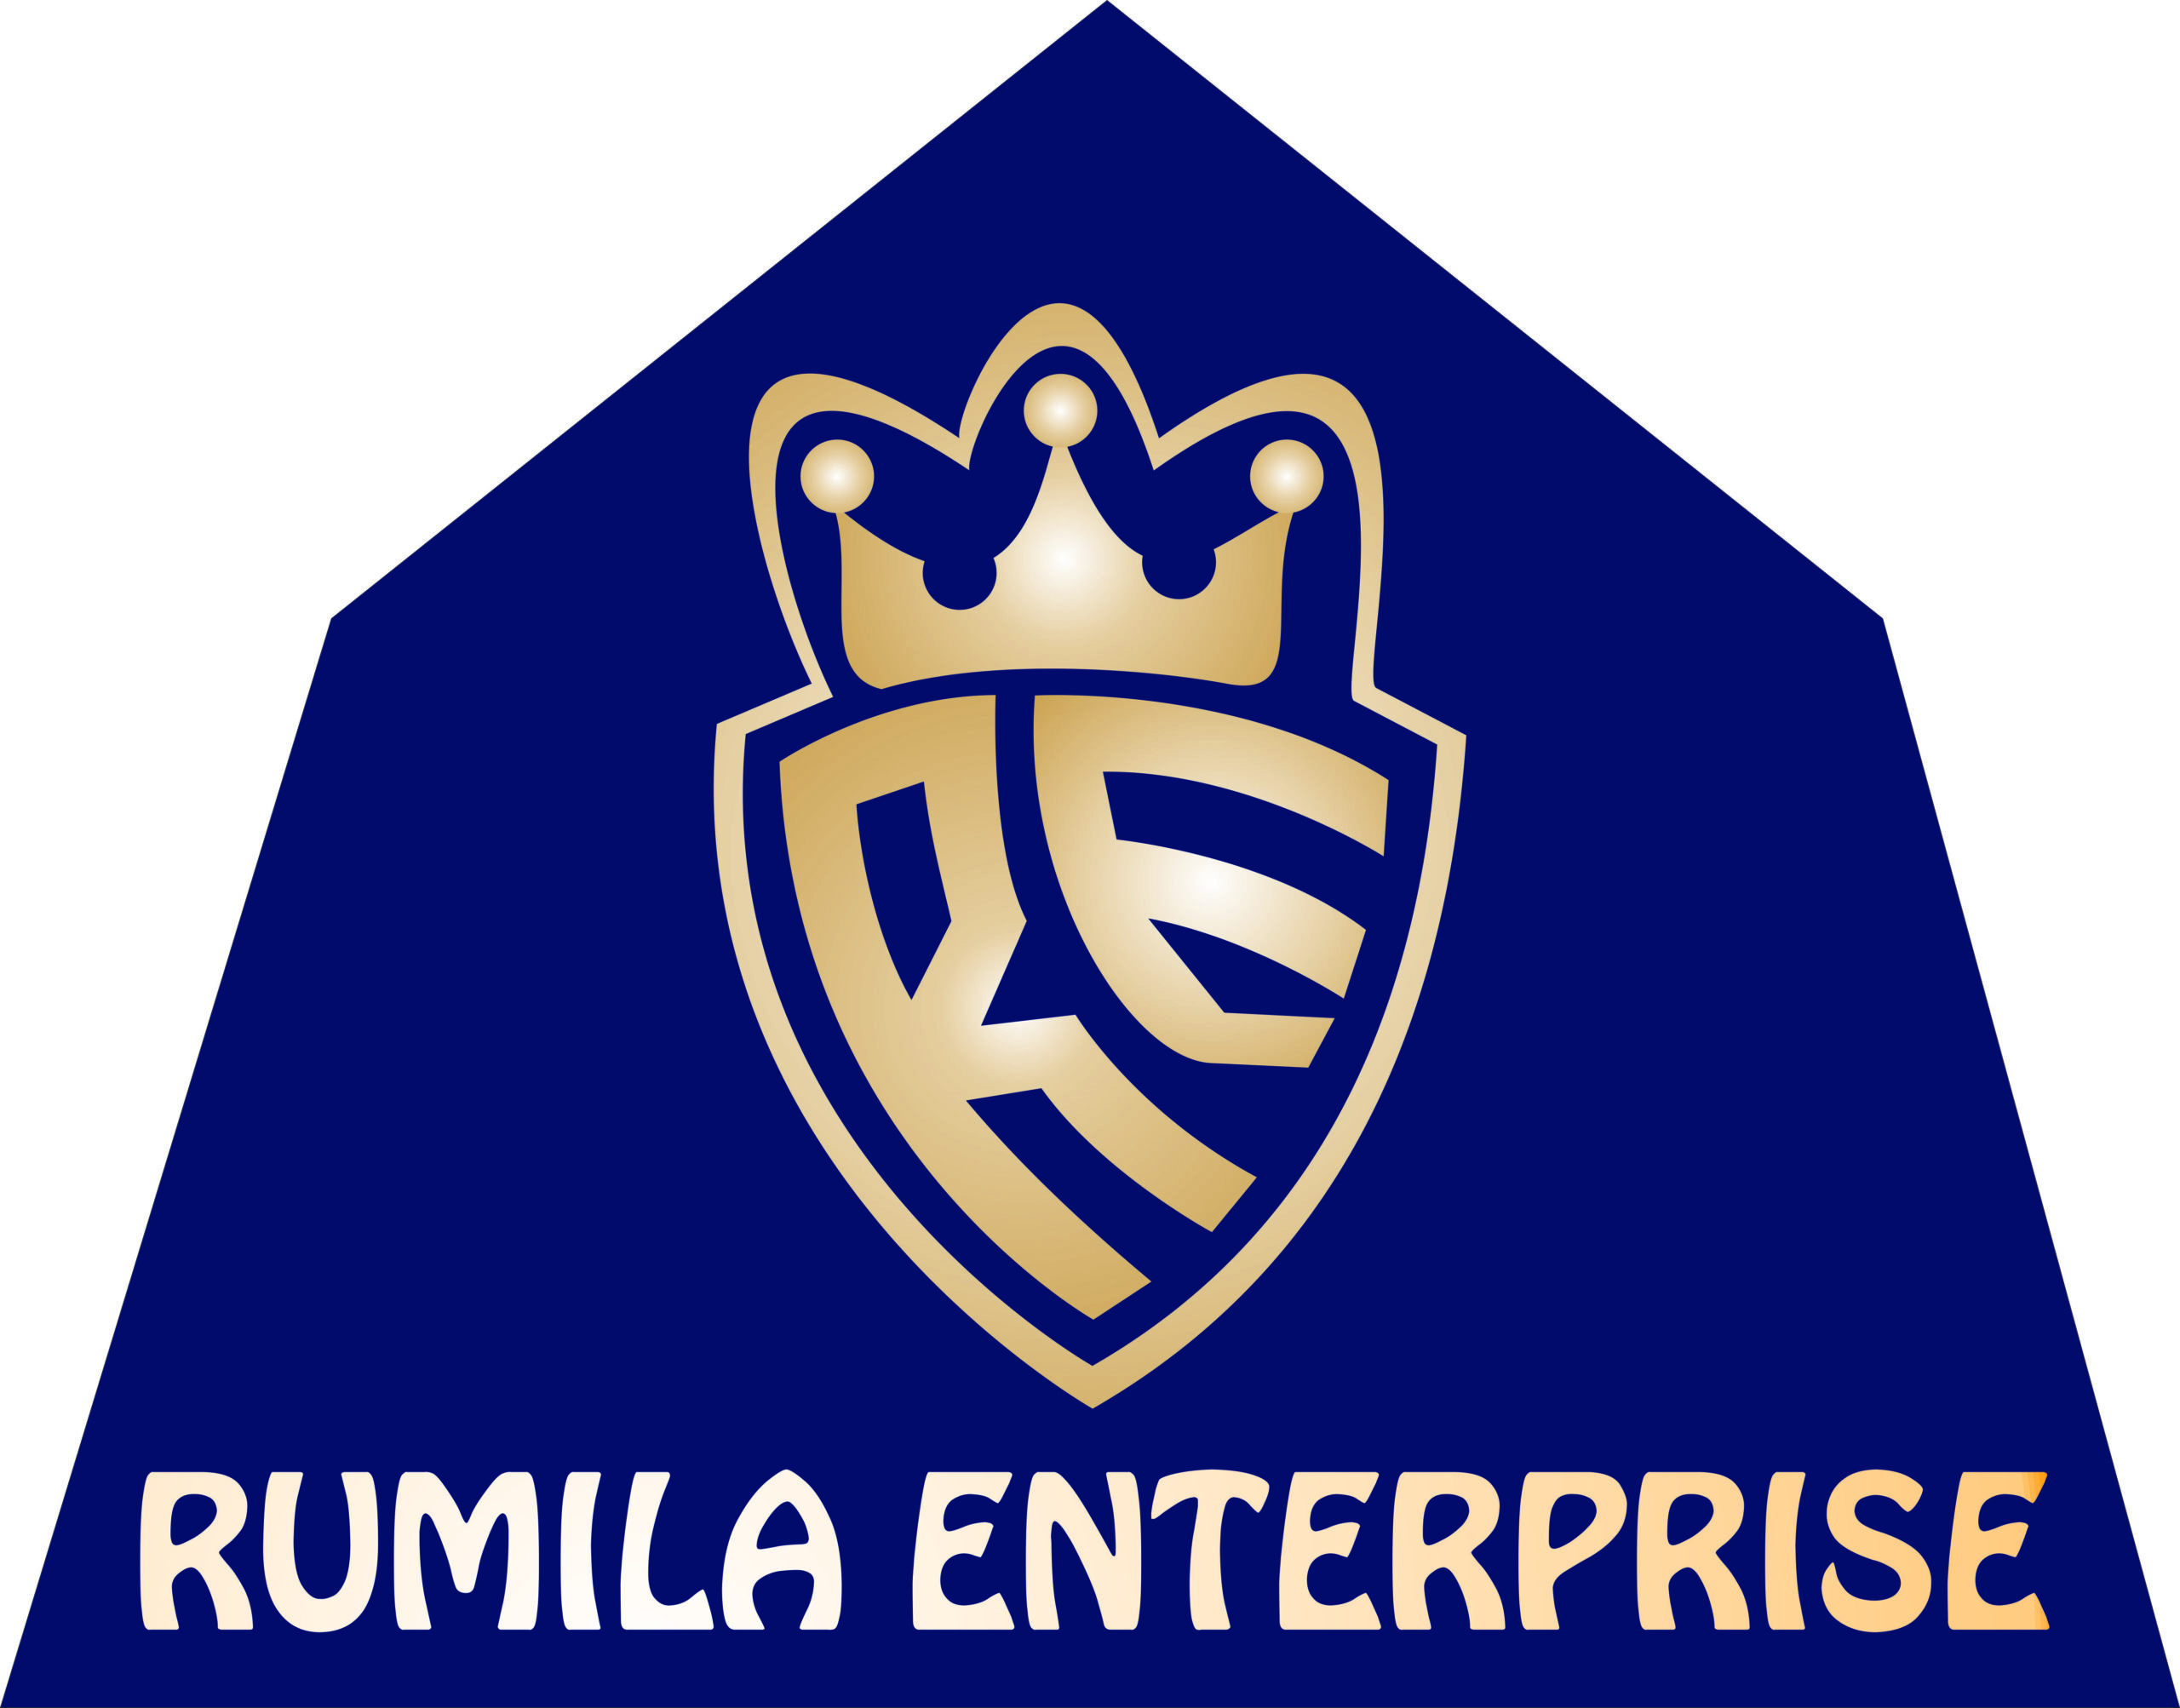 Rumila Enterprises